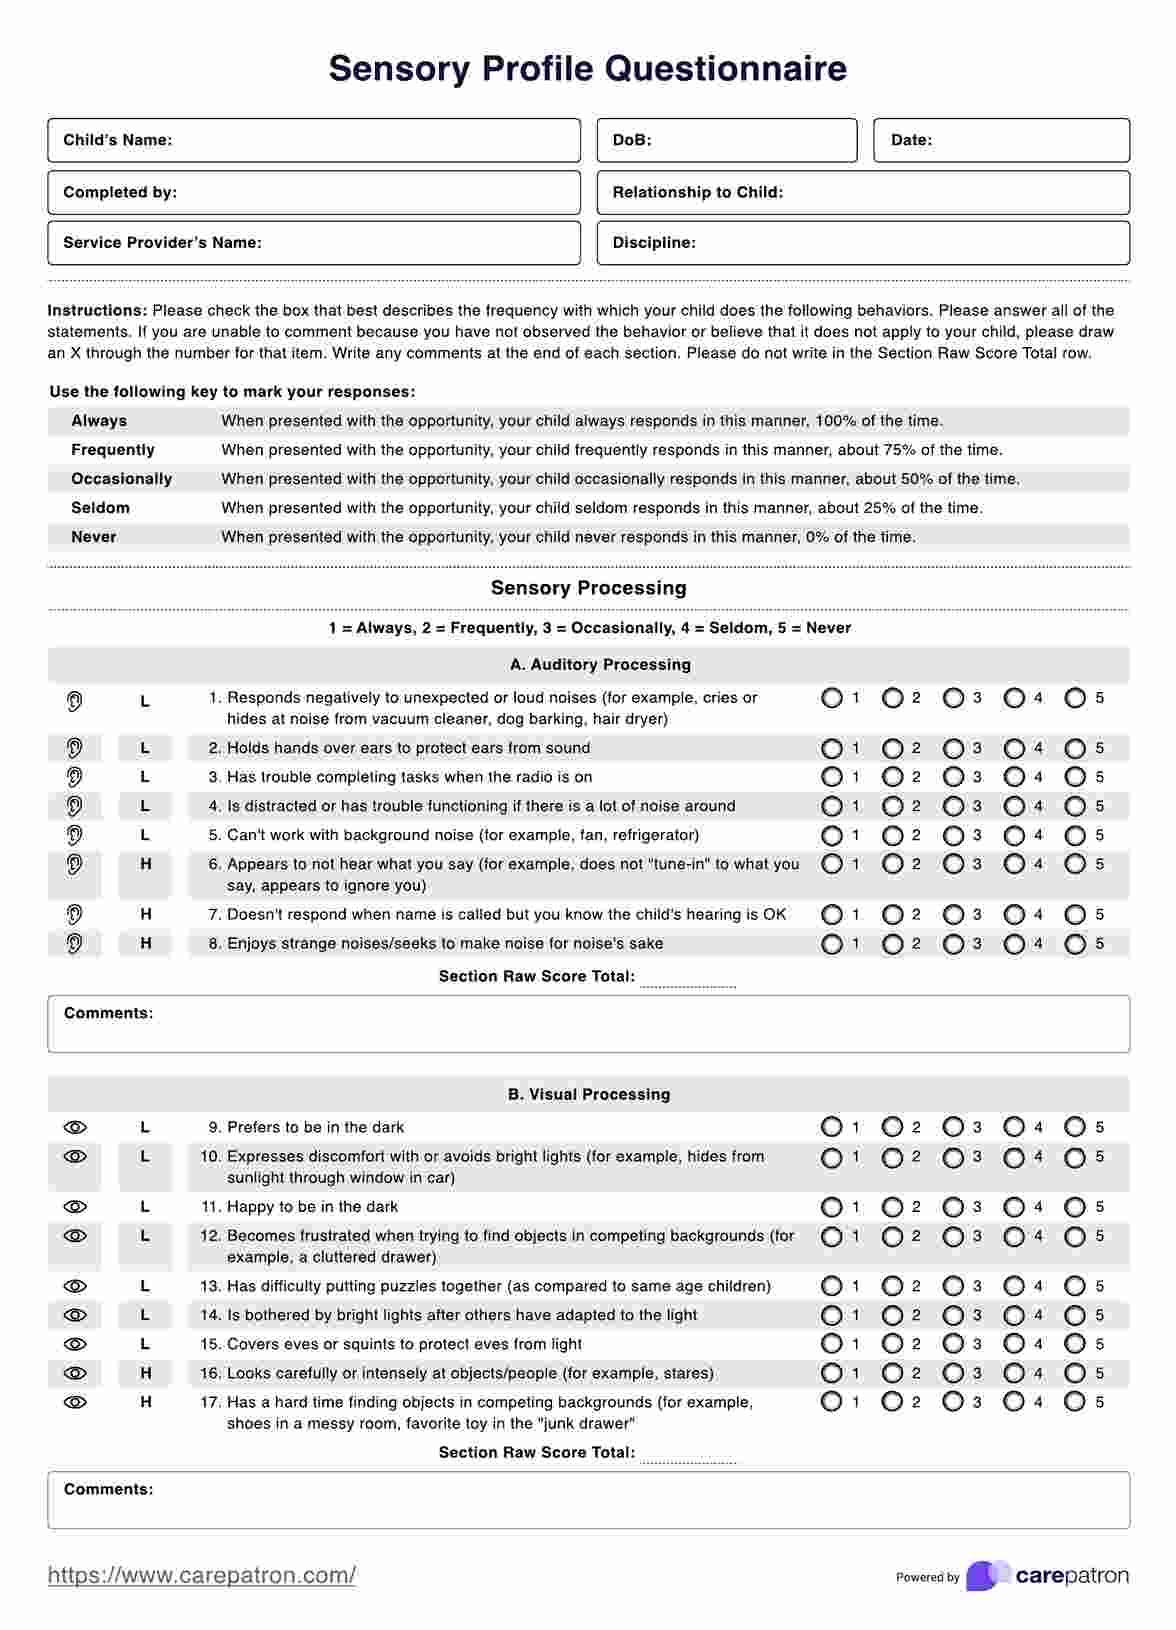 Sensory Profile Questionnaire PDF Example